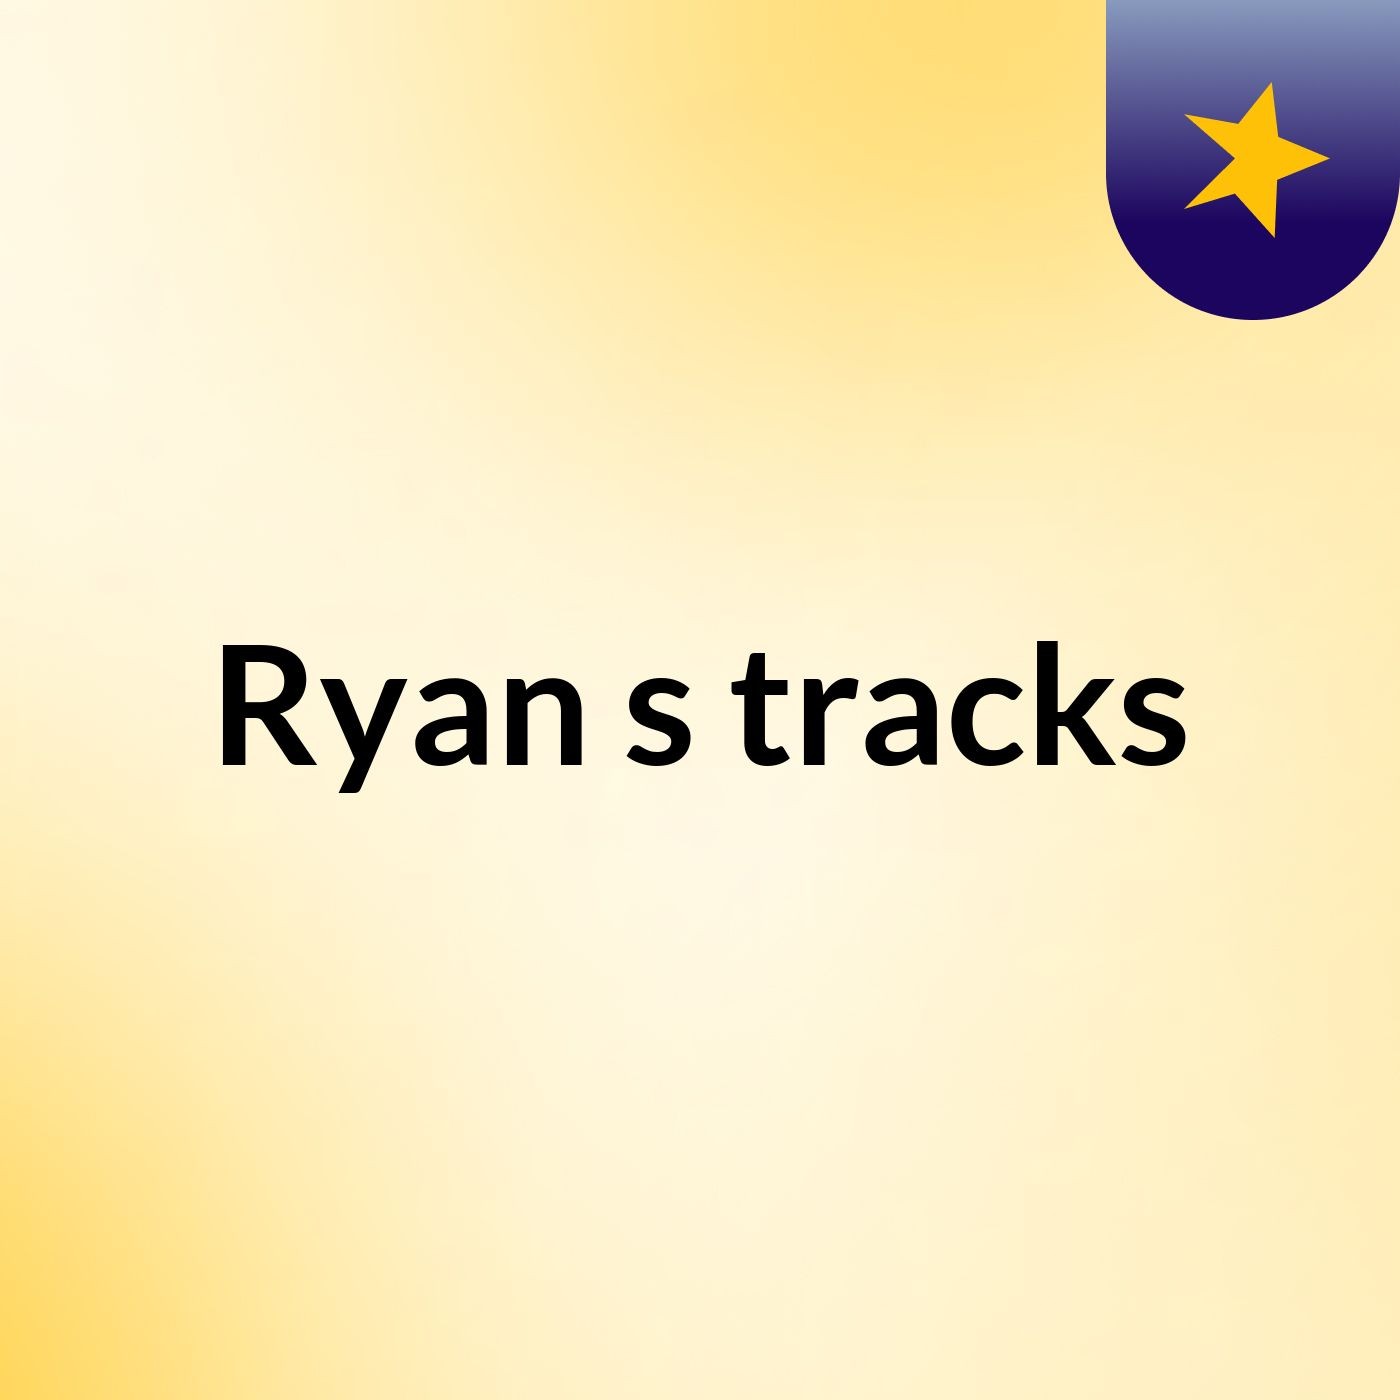 Ryan's tracks